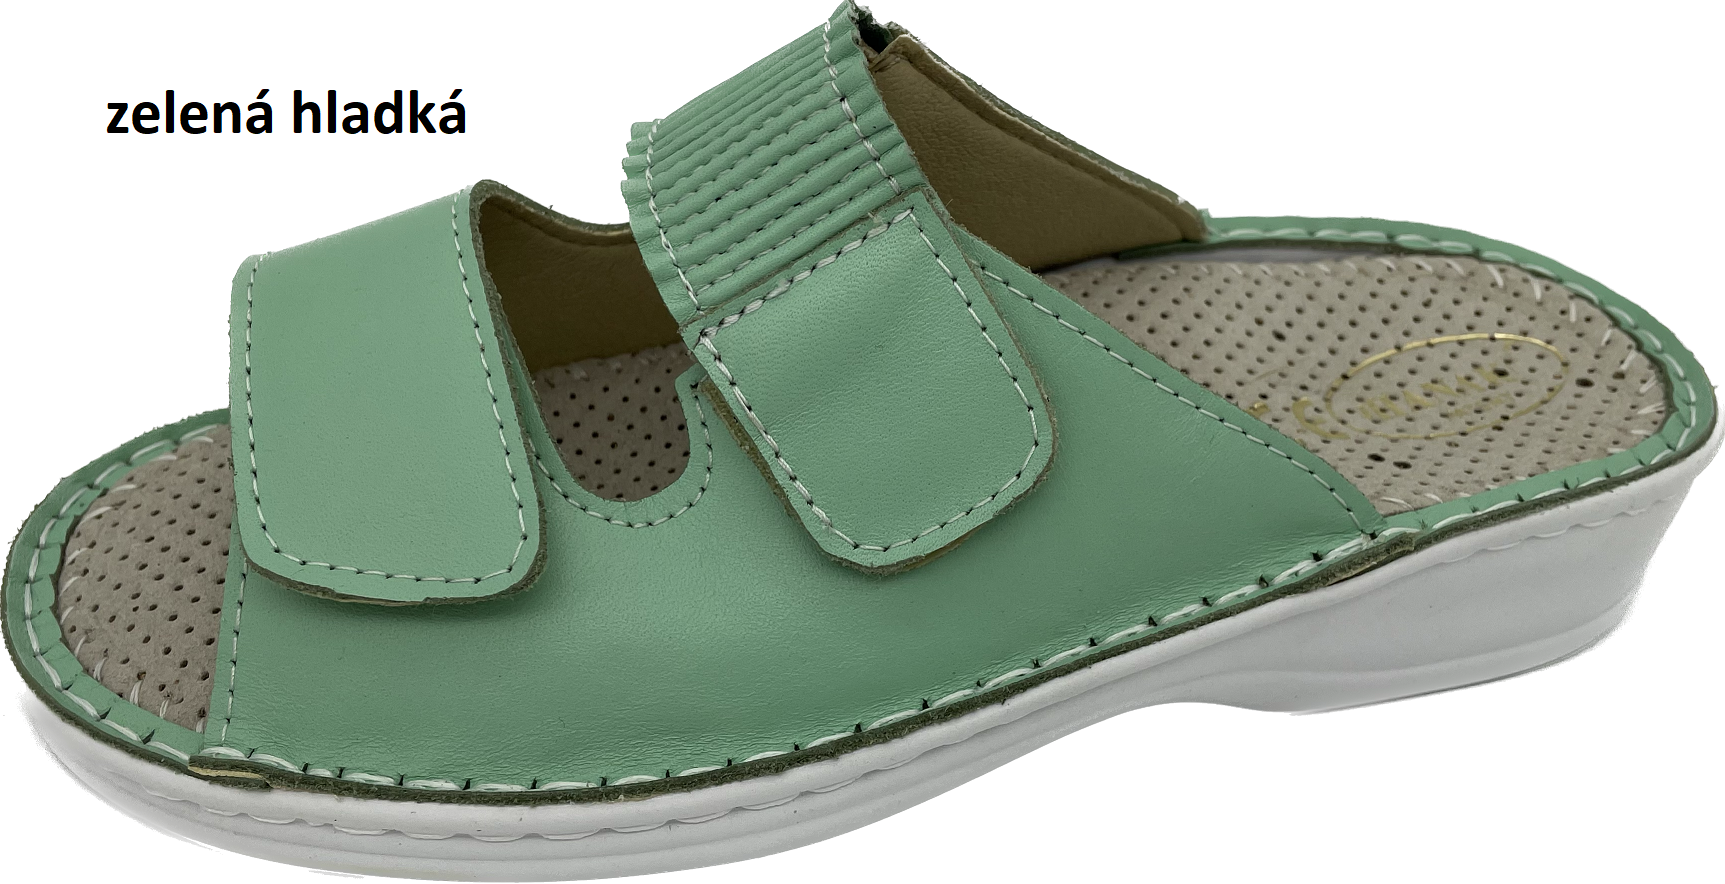 Boty Hanák vzor 304 - bílá podešev Barva usně: zelená hladká, Velikosti obuvi: 39